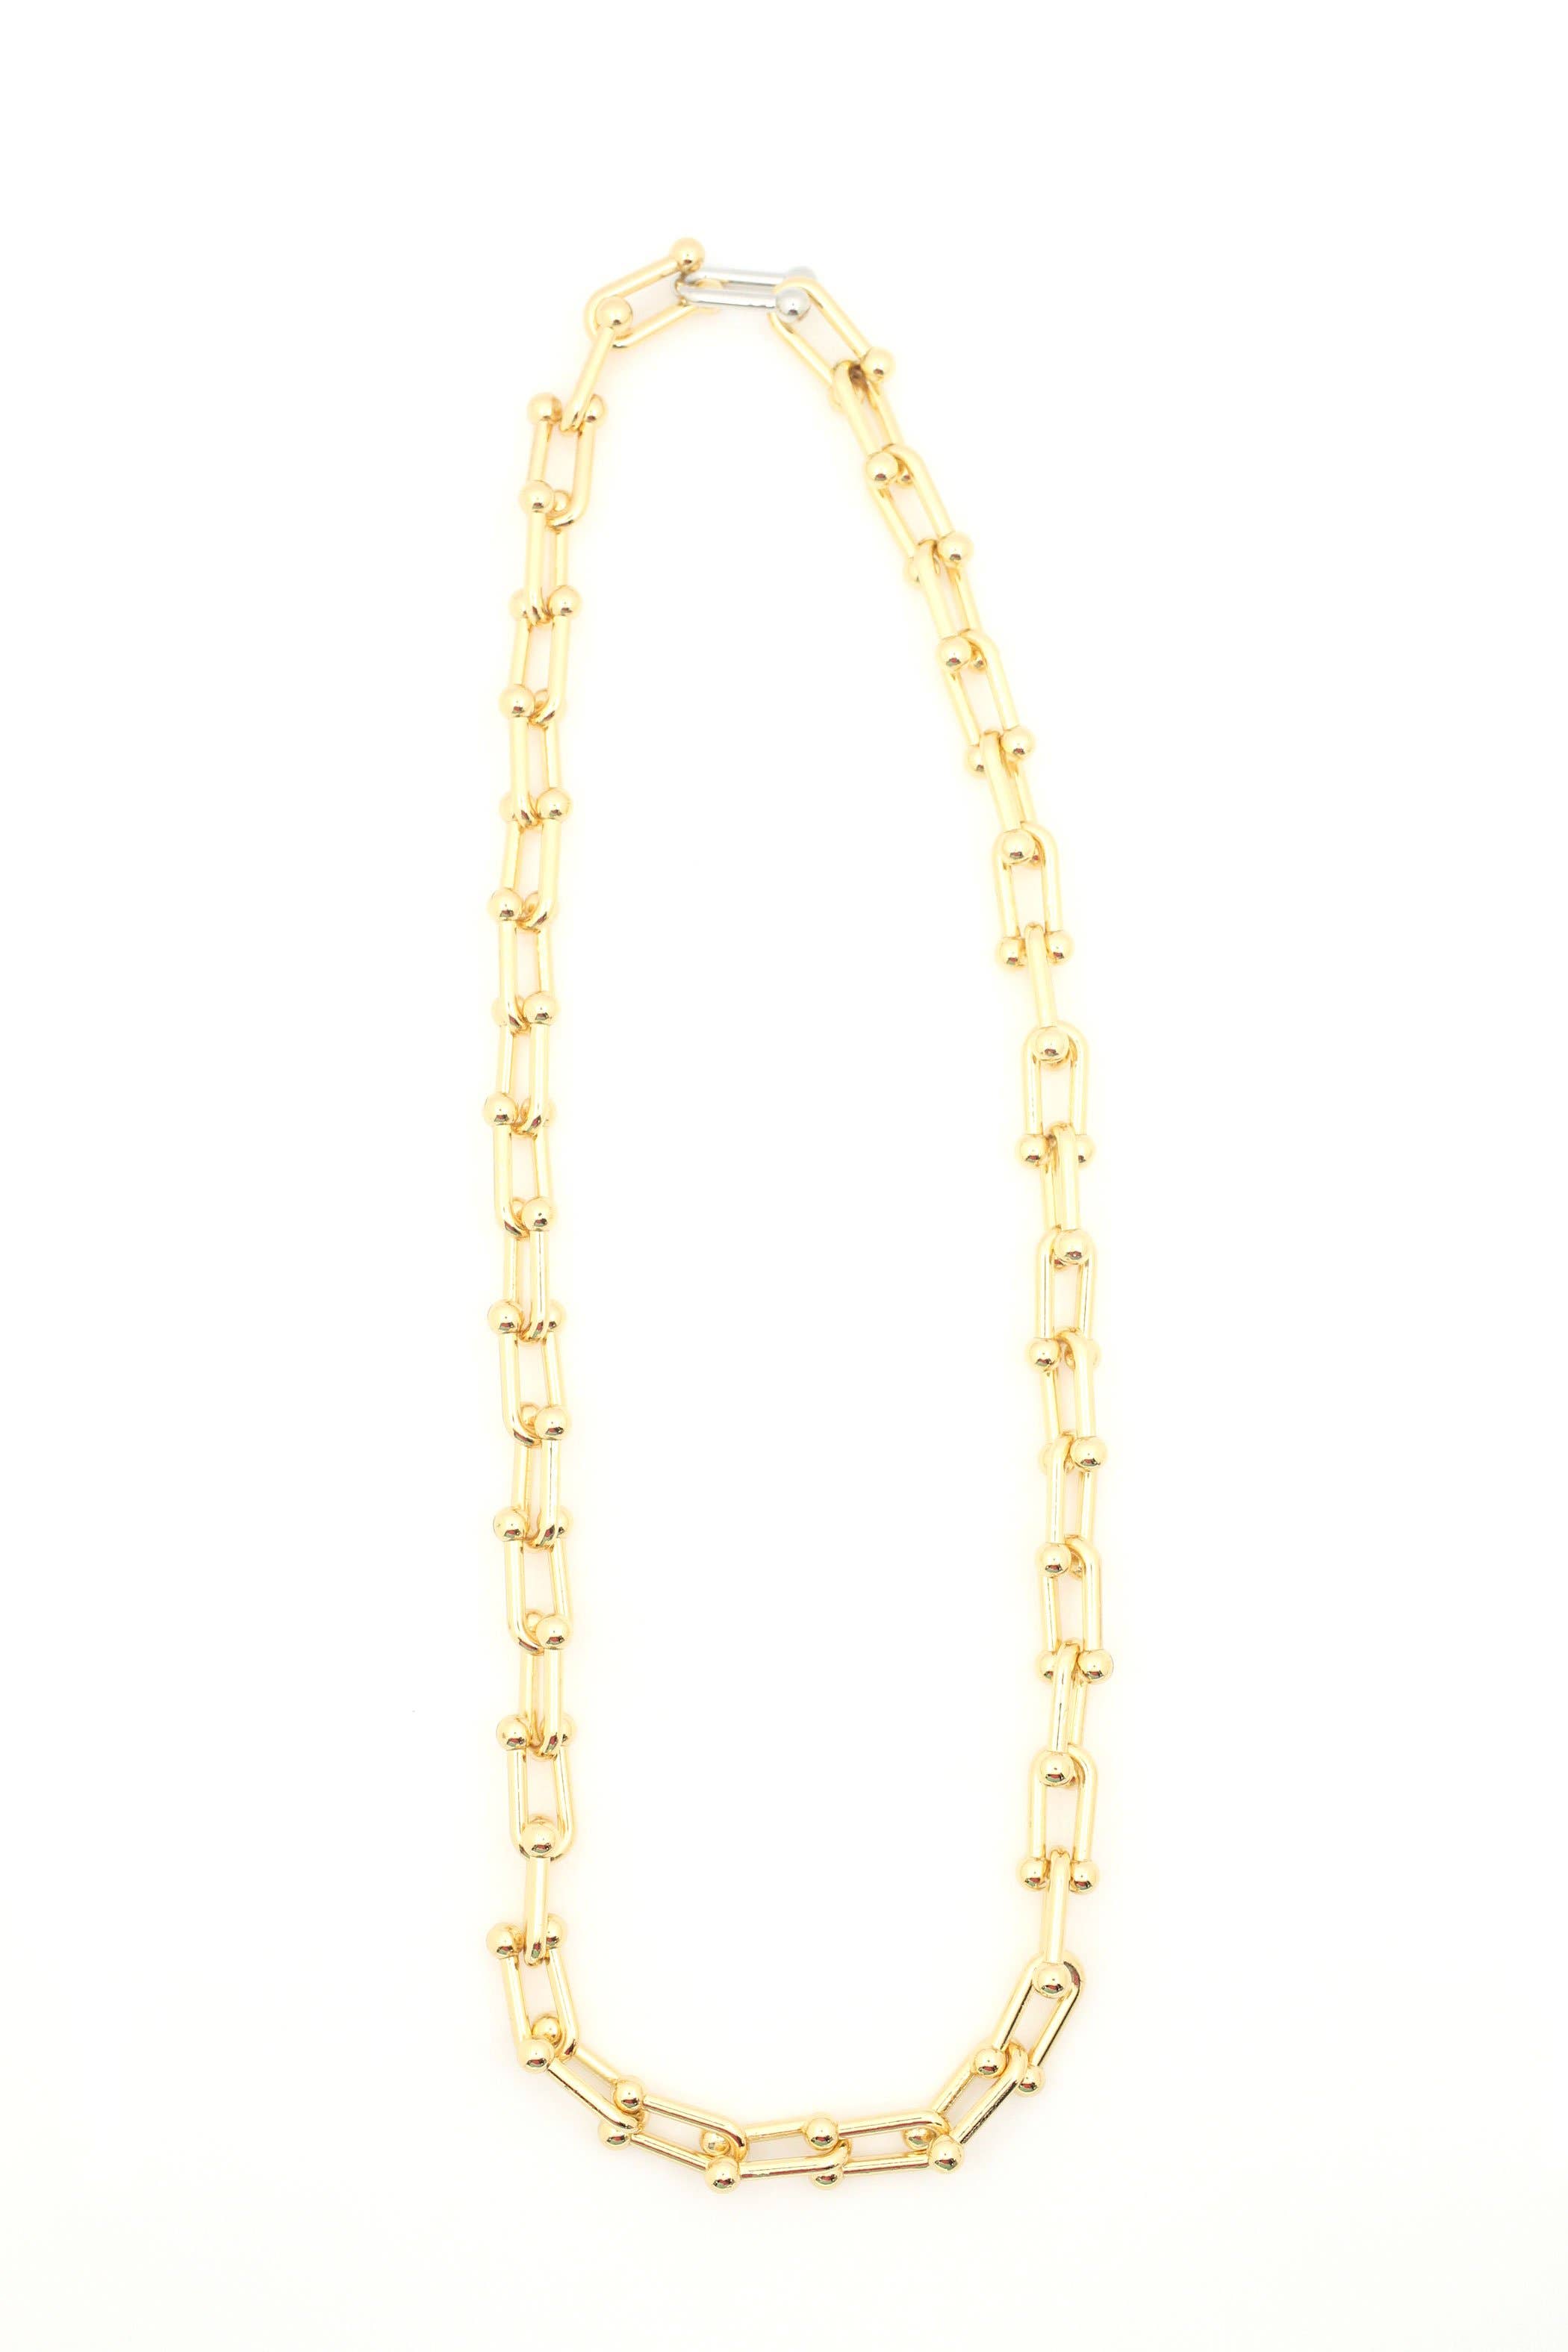 Stella & Dot Collar estilo collier color oro-color plata elegante Joyería Collares estilo collier 